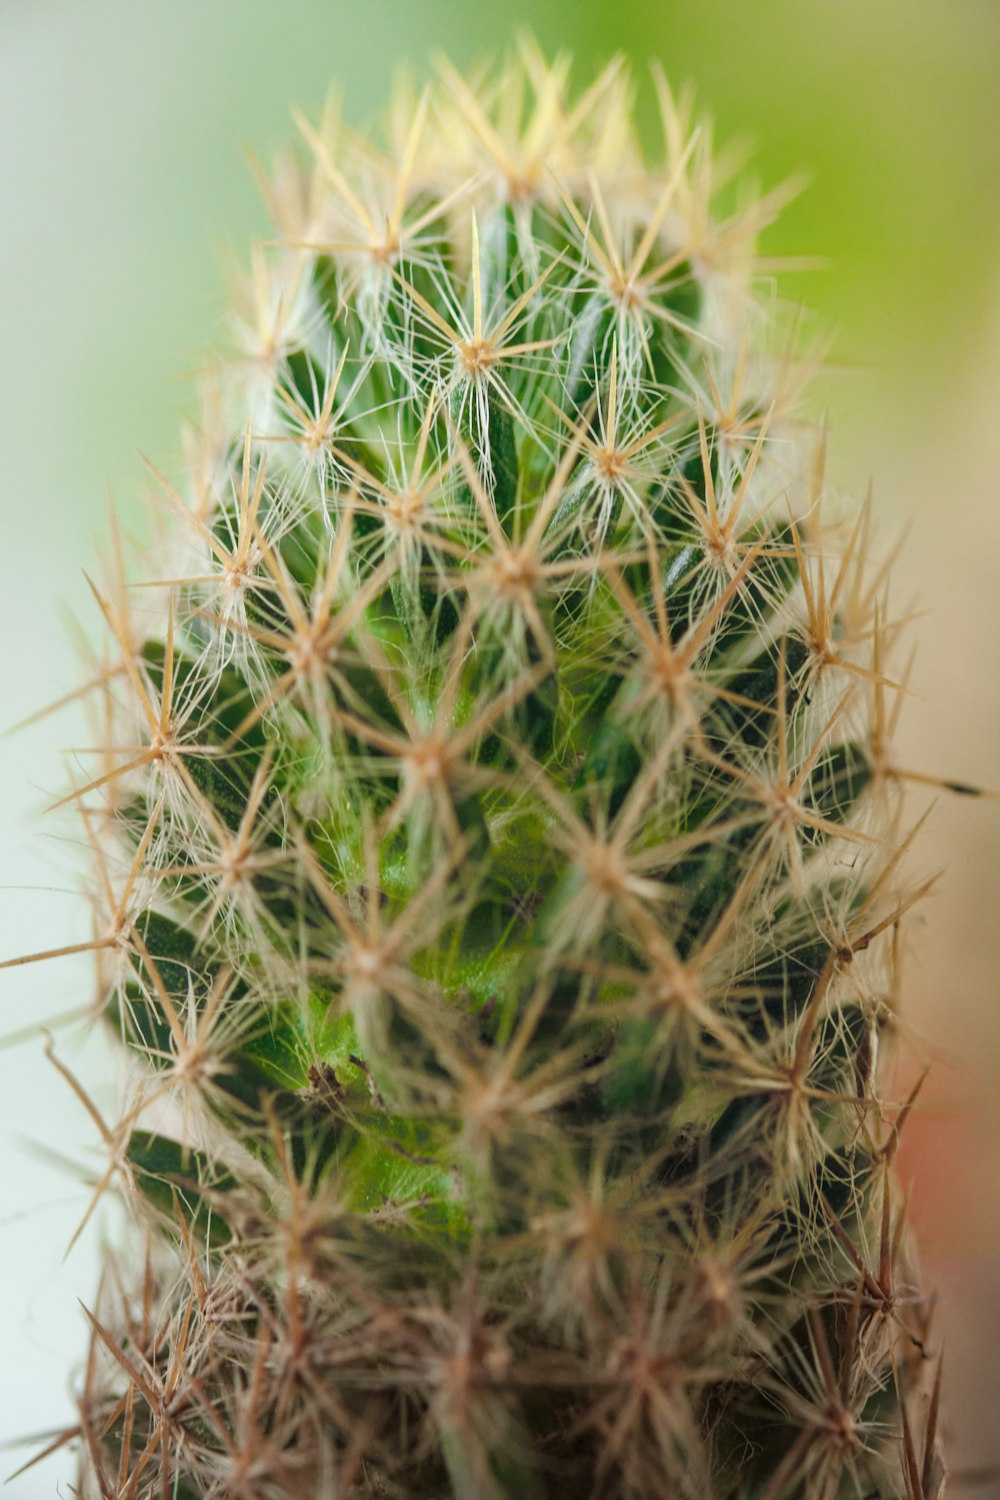 Un primer plano de un cactus con un fondo borroso